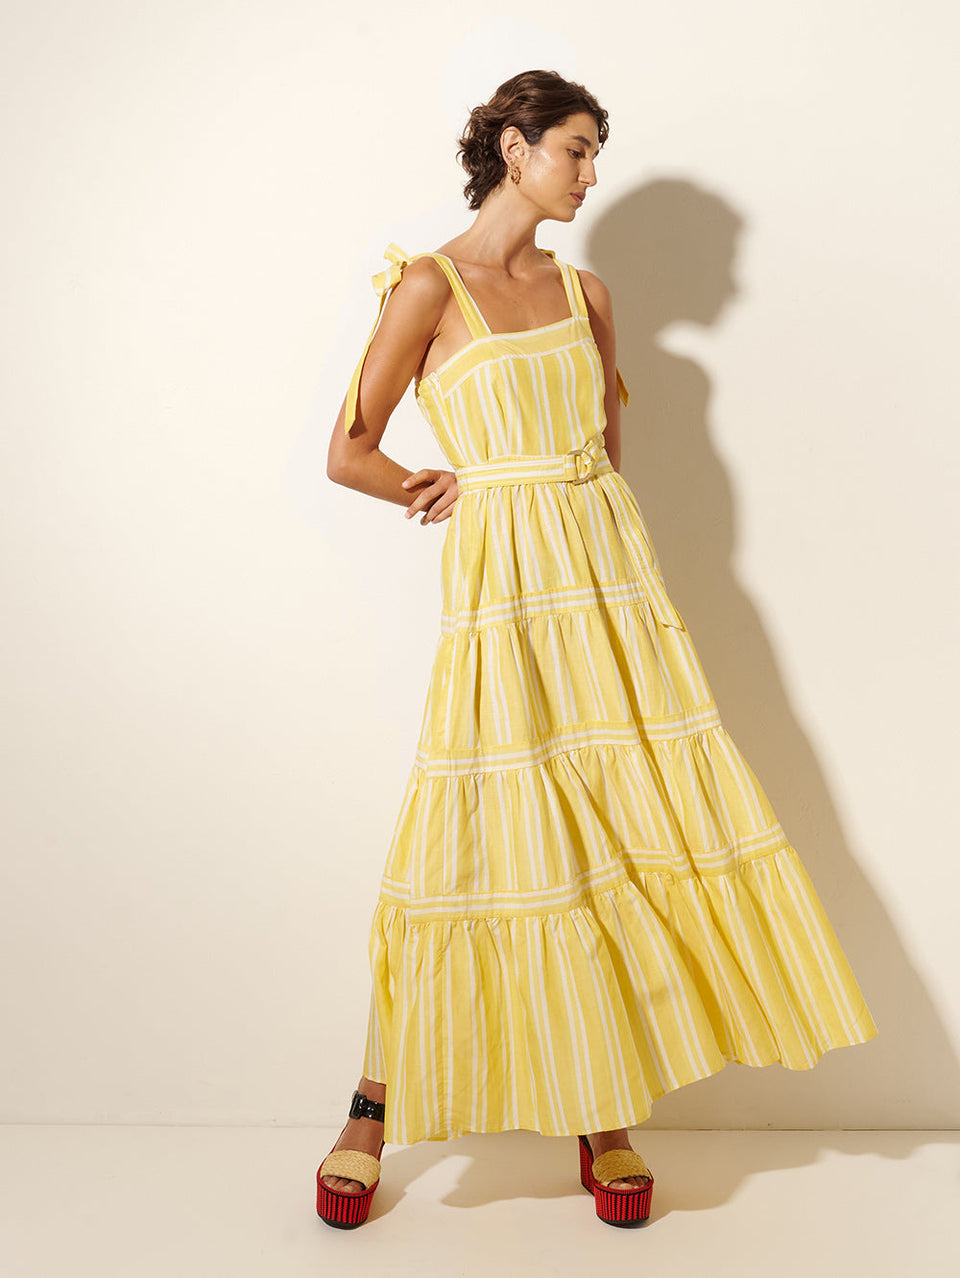 Lola Maxi Dress KIVARI | Model wears yellow and white striped maxi dress